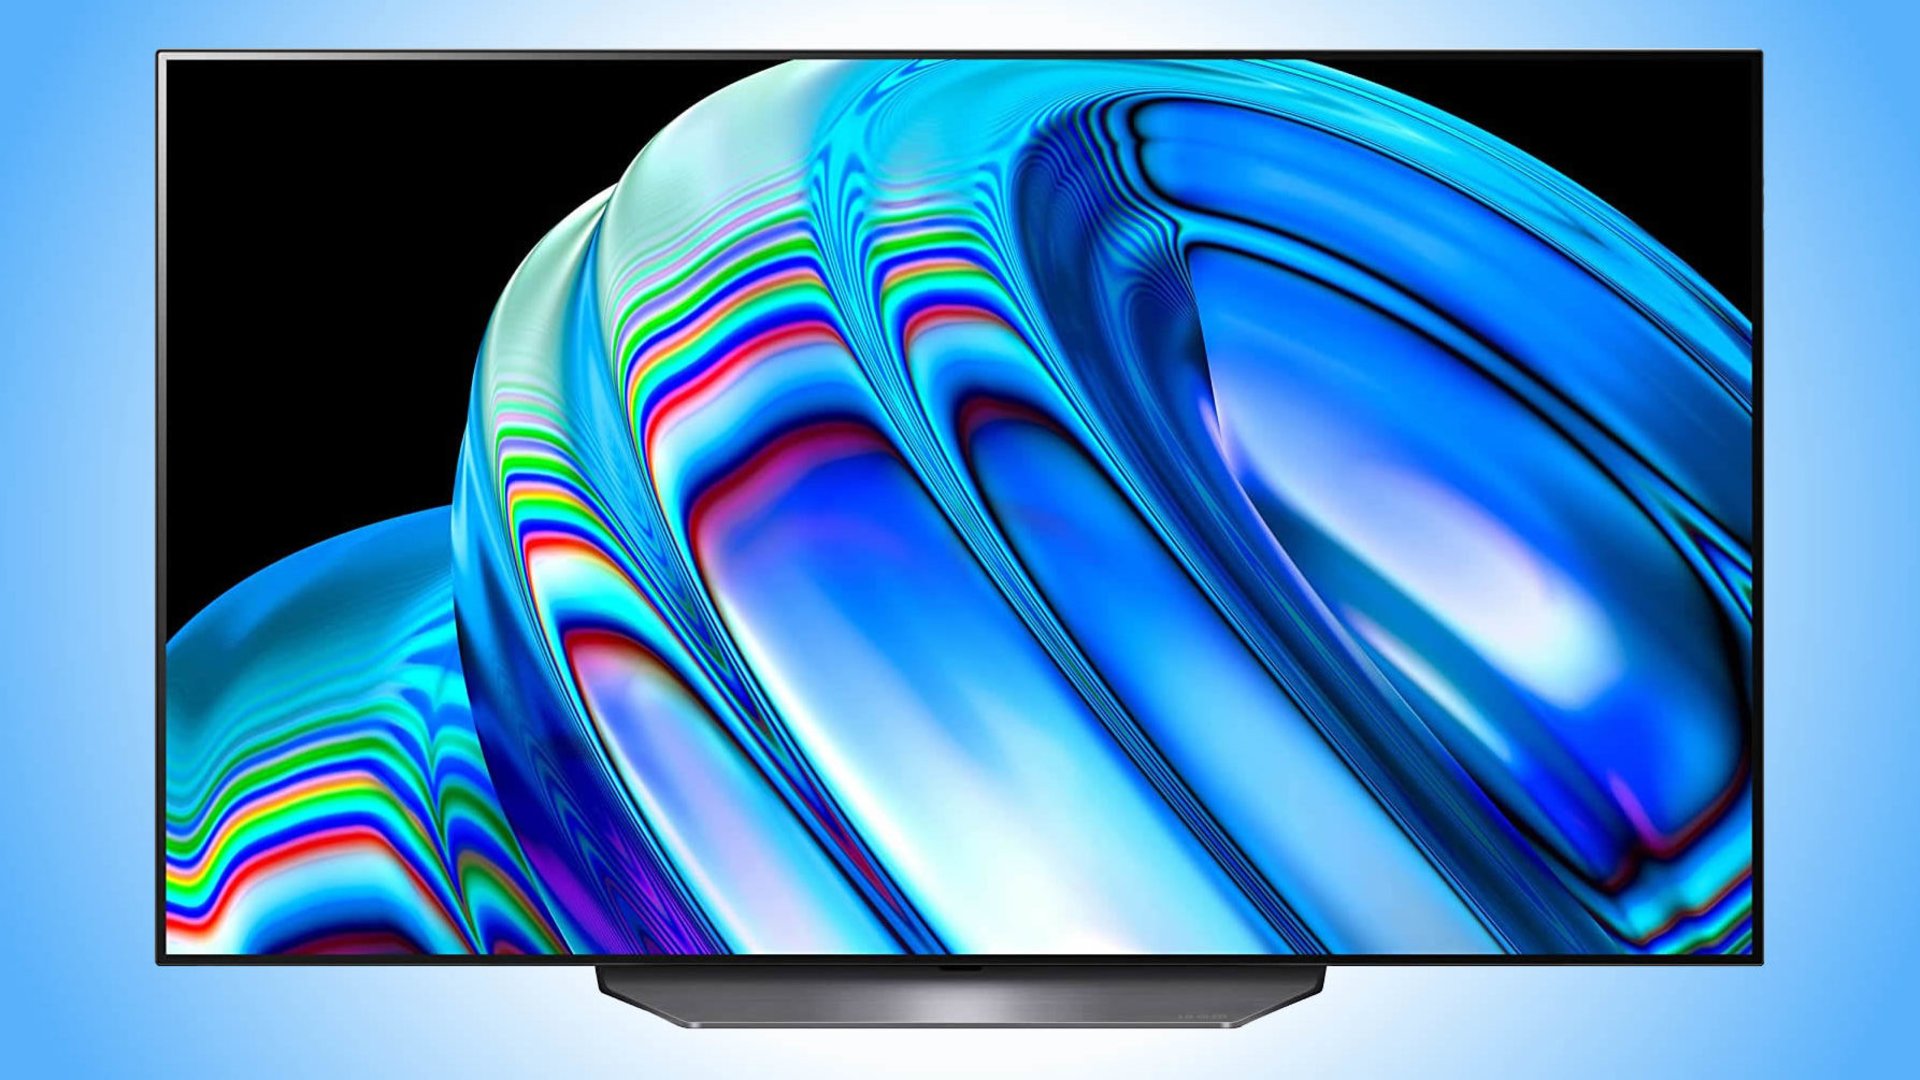 #Amazon verkauft LG-OLED-TV mit 55 Zoll zum Schnäppchenpreis